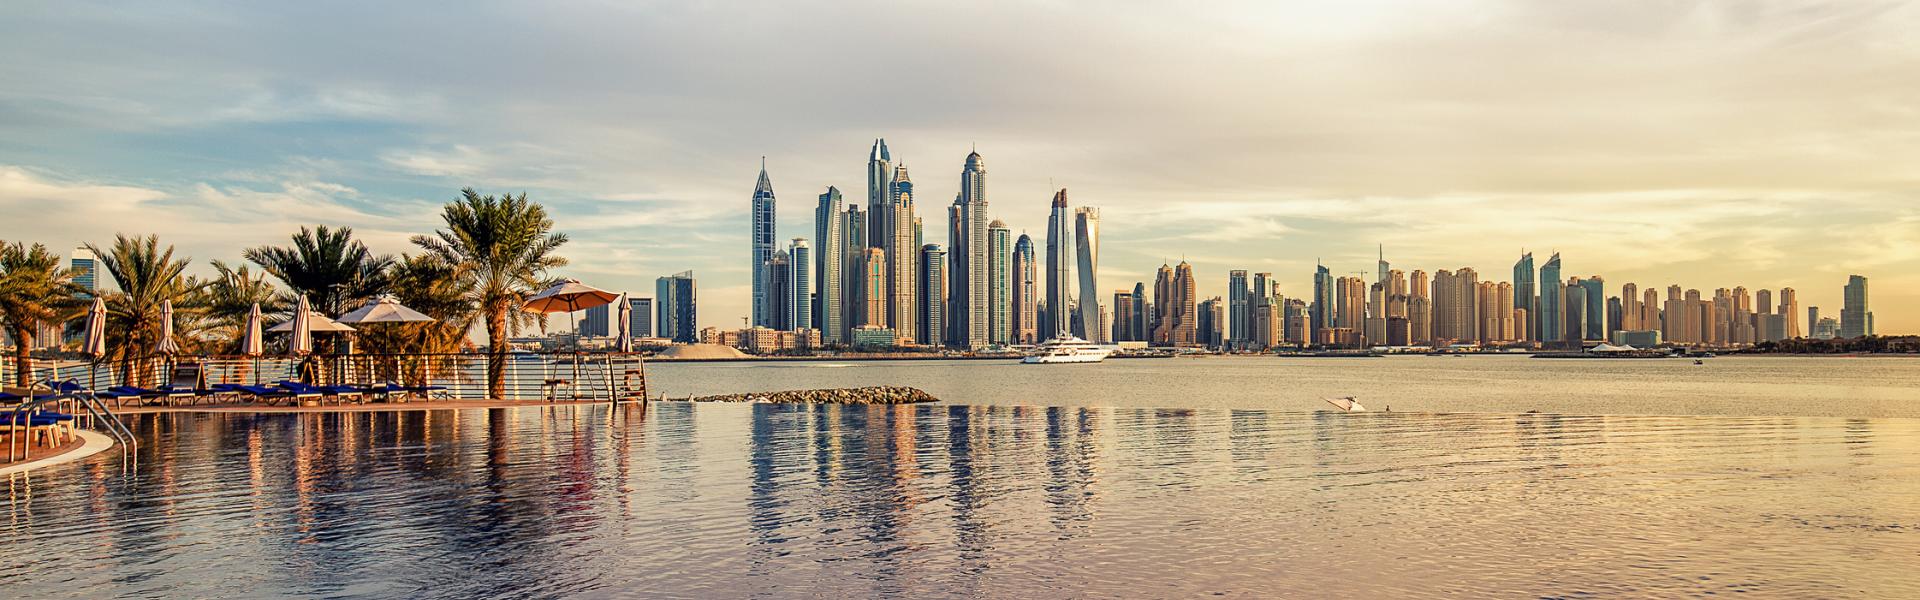 Noclegi w Zjednoczonych Emiratach Arabskich - HomeToGo